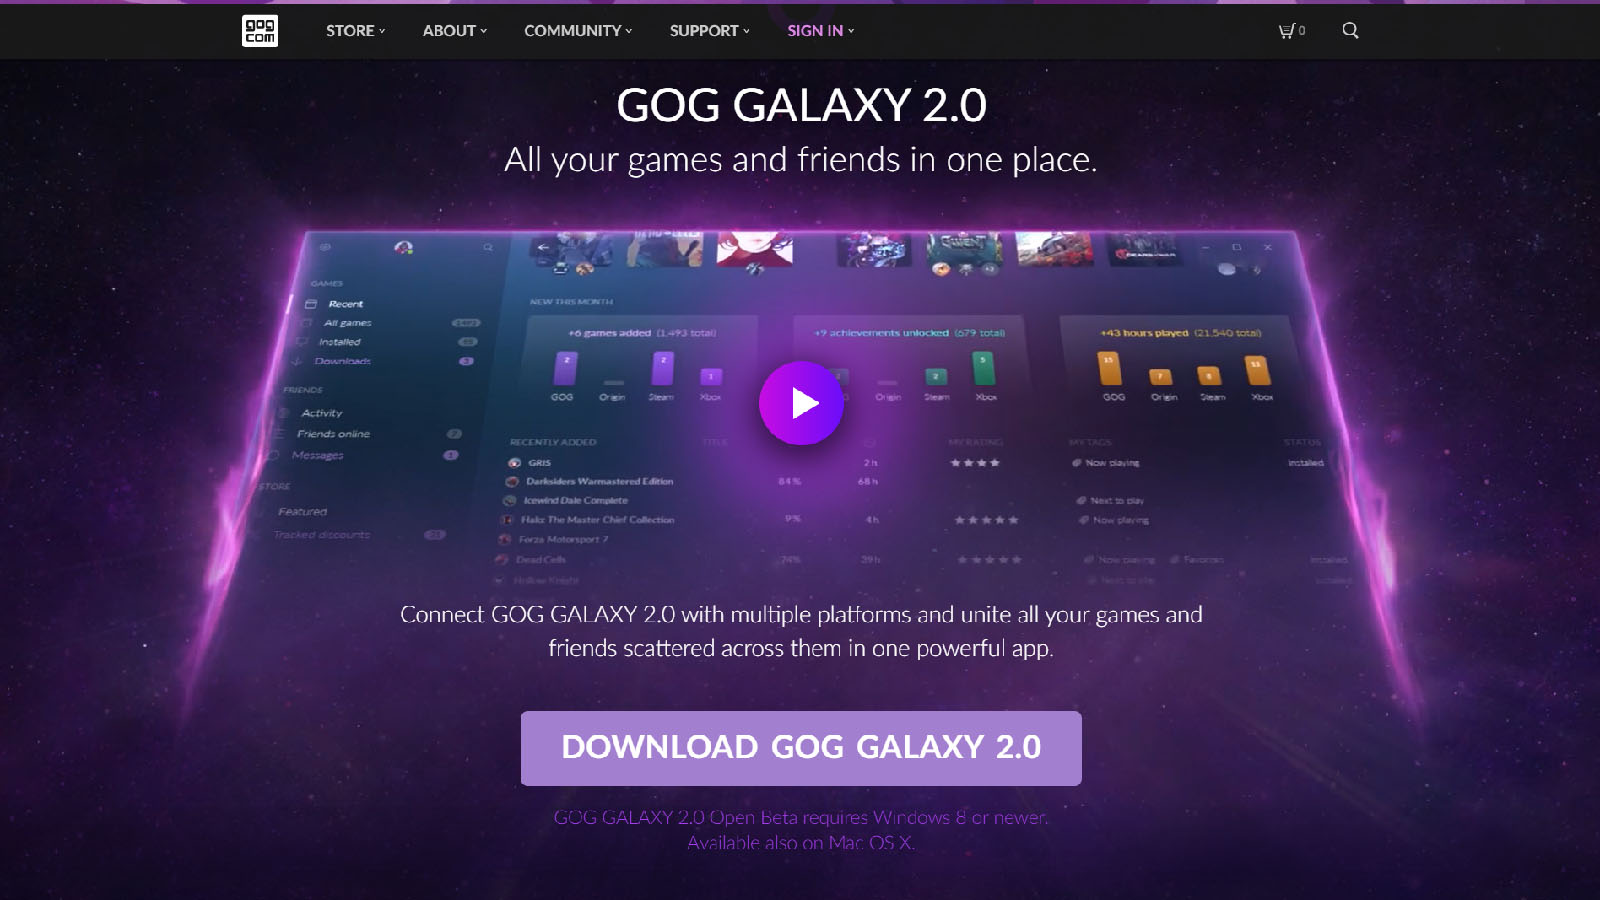 gog galaxy 2.0 integrations